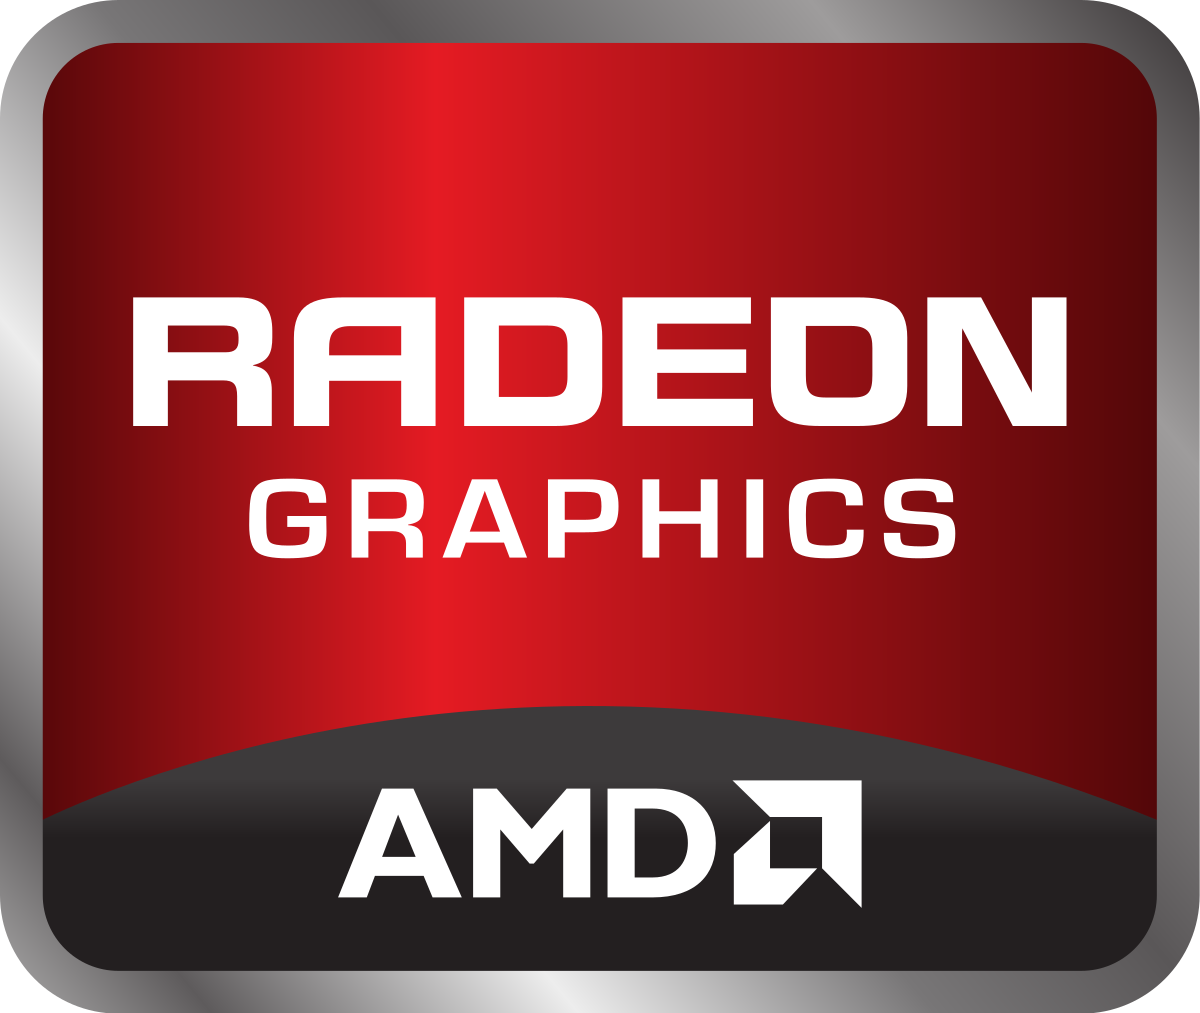 Placa de vídeo: NVIDIA GeForce GT 9800 / AMD Radeon HD 6770
DirectX: Versão 9.0c